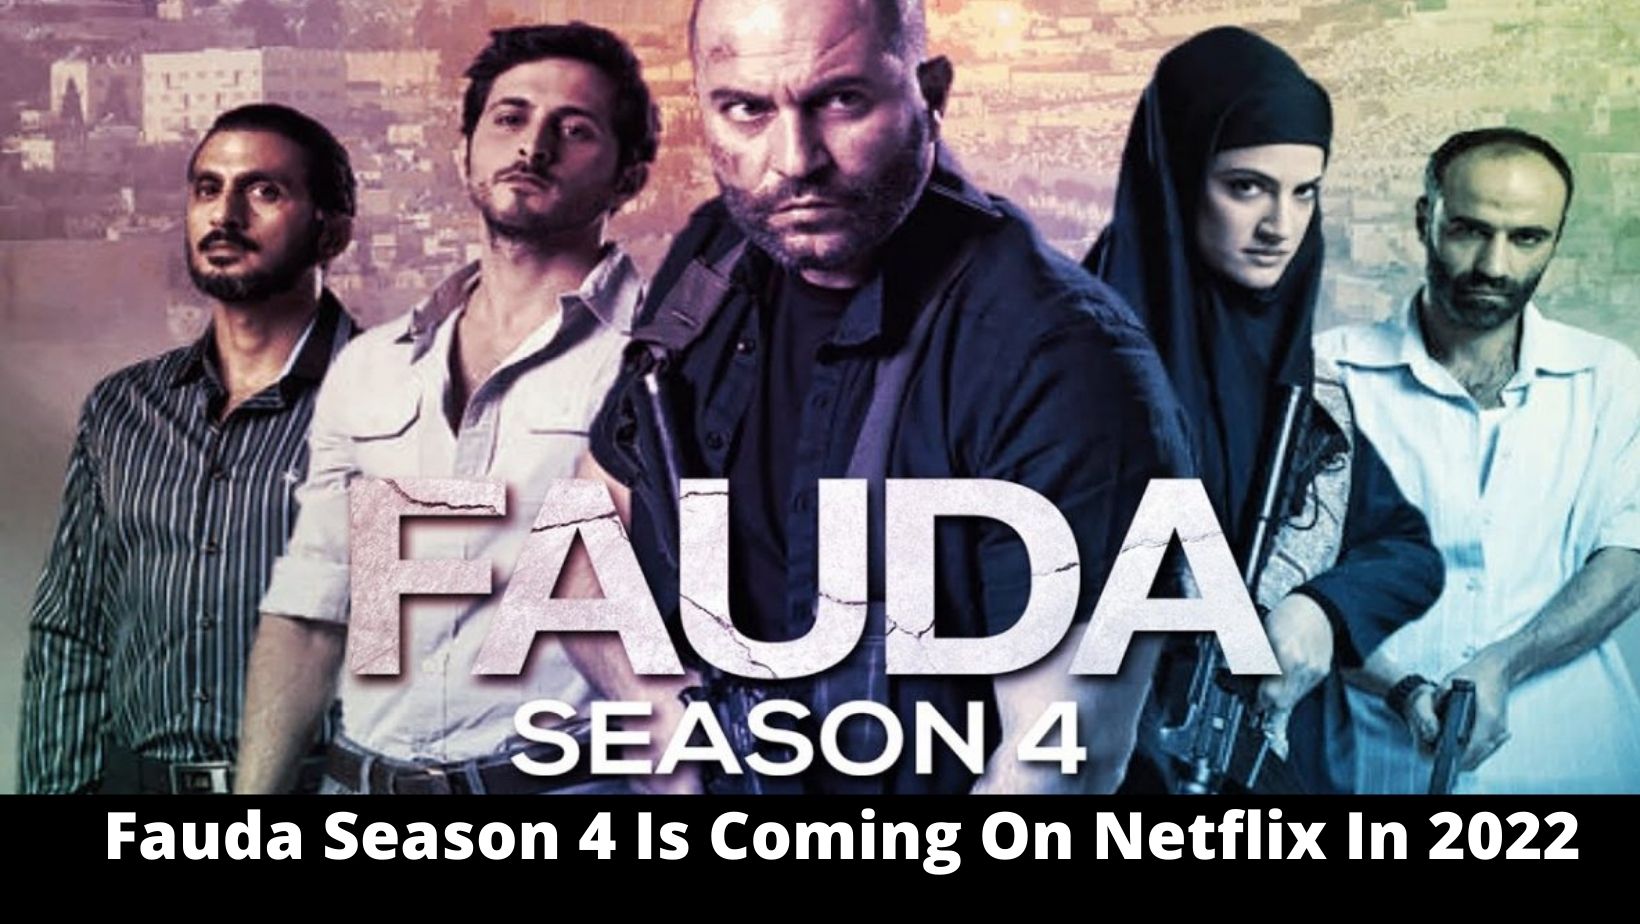 Fauda Season 4 Is Coming On Netflix In 2022